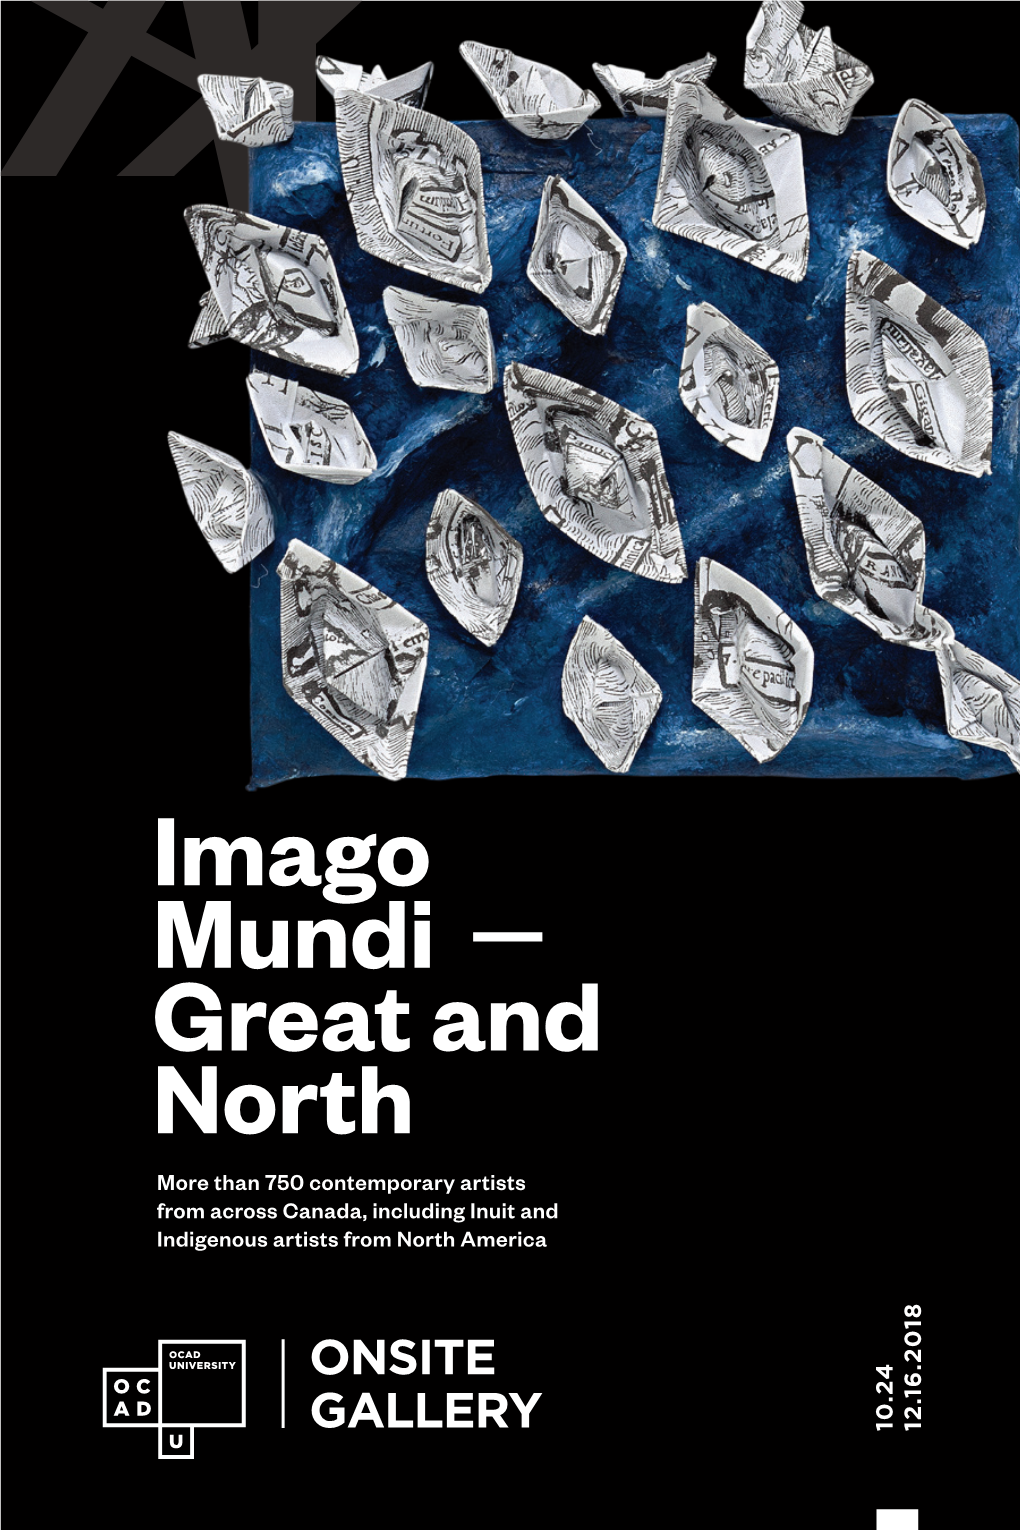 Imago Mundi Great and North